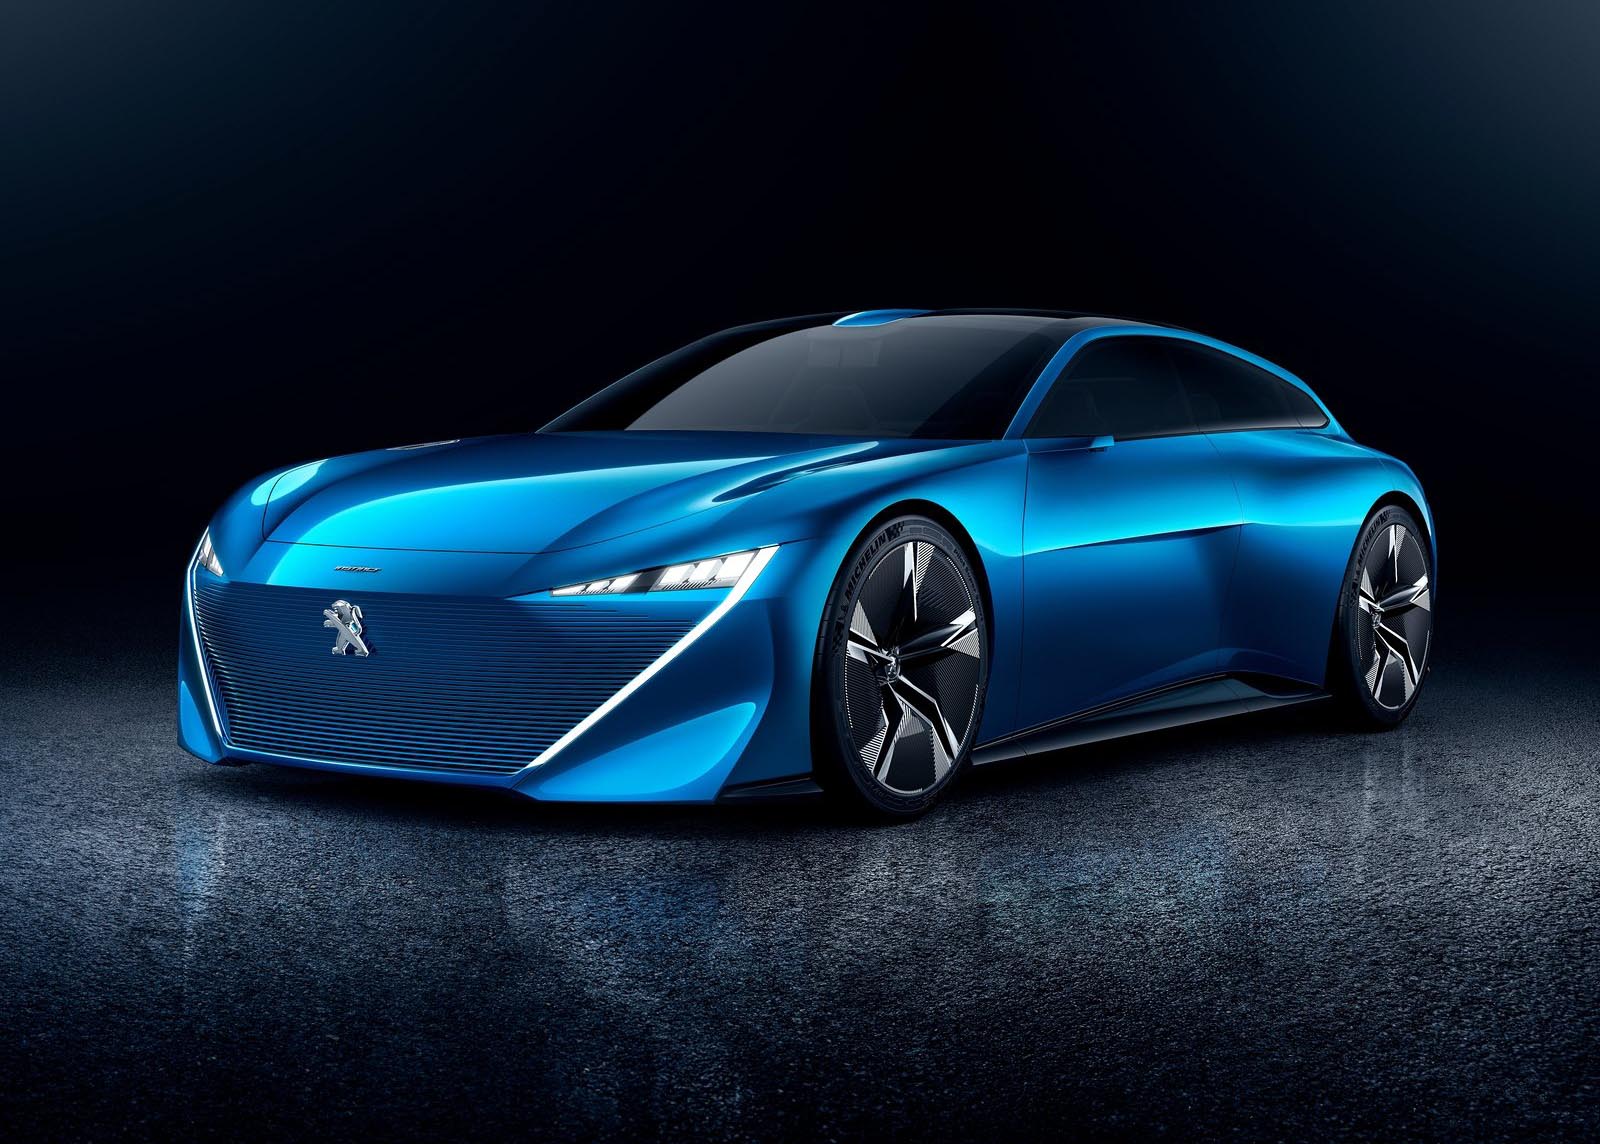 Peugeot 508 sedan will be presented in Geneva